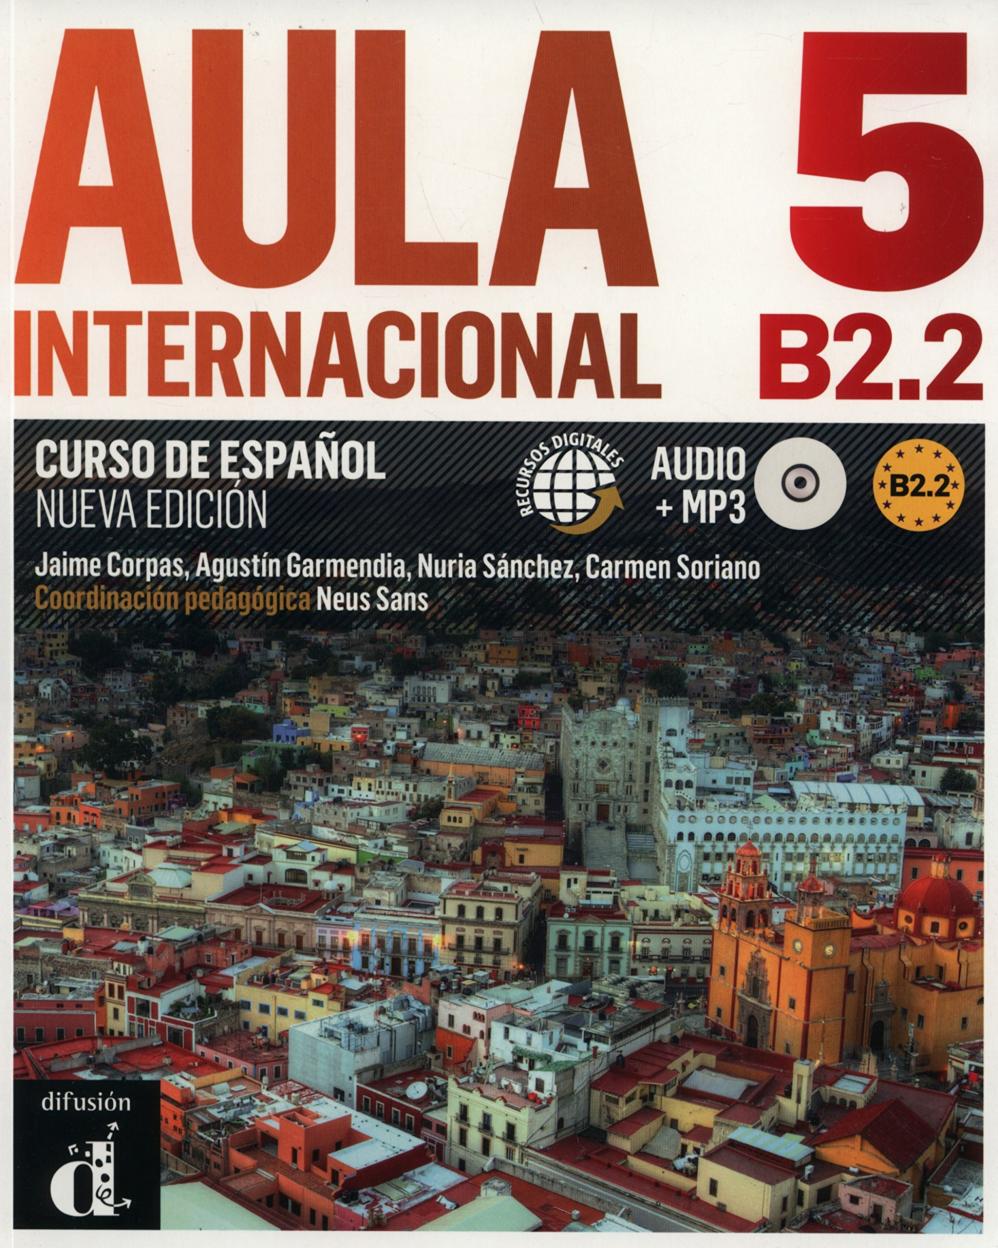 Aula Internacional 5 B2.2 podręcznik+ CD